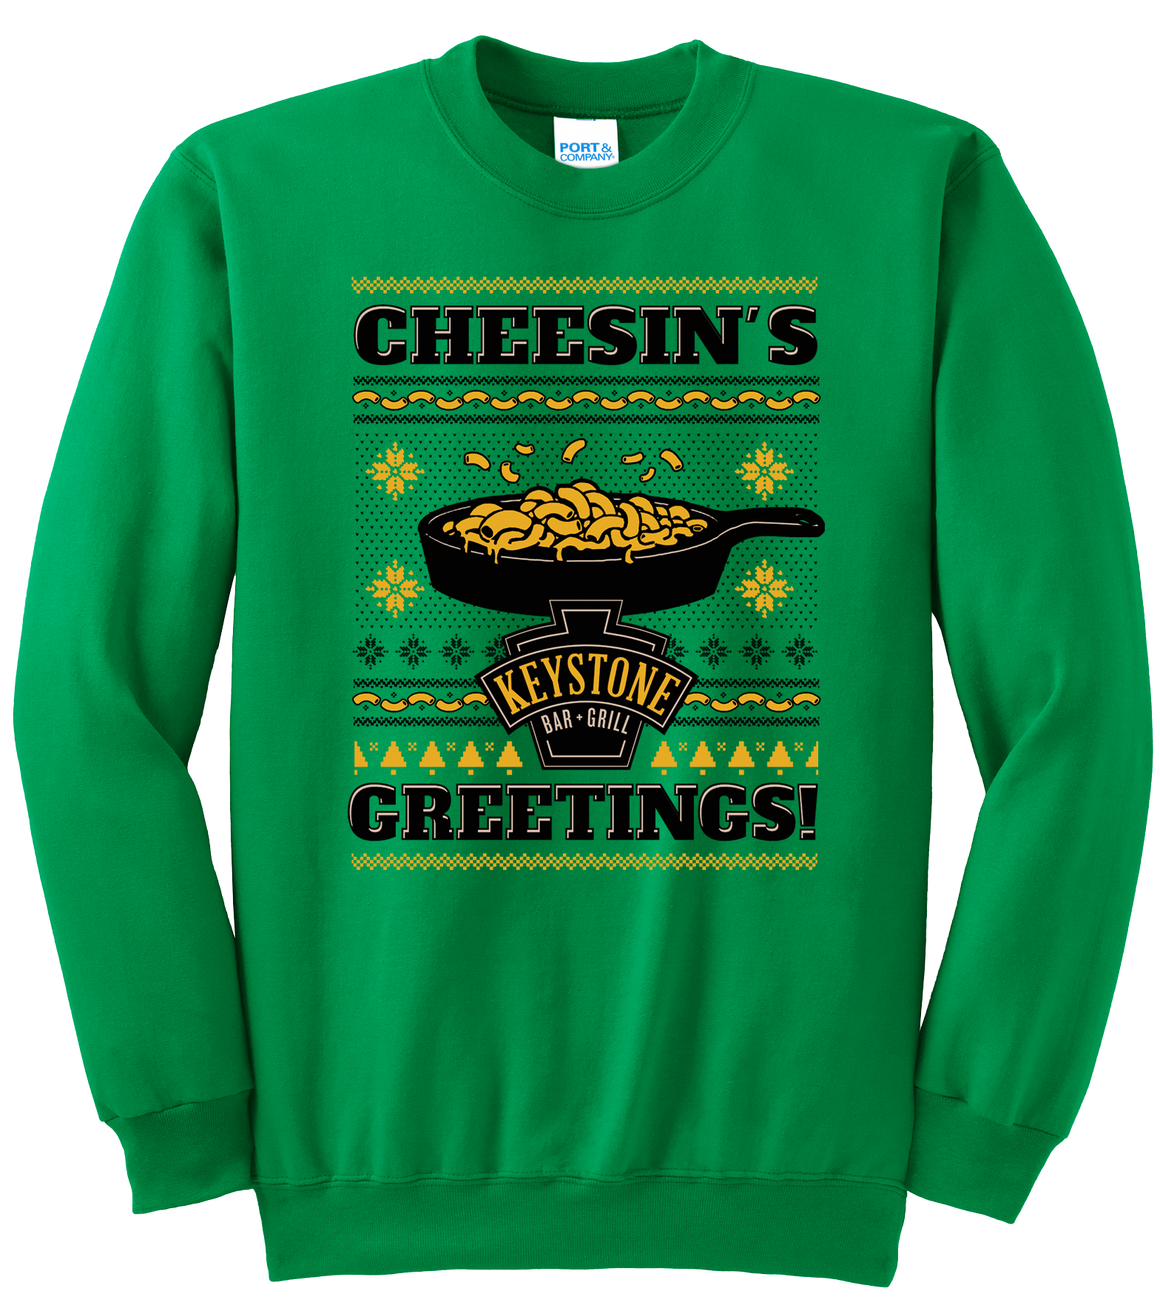 Keystone Bar + Grill Cheesin's Greetings - Cincy Shirts